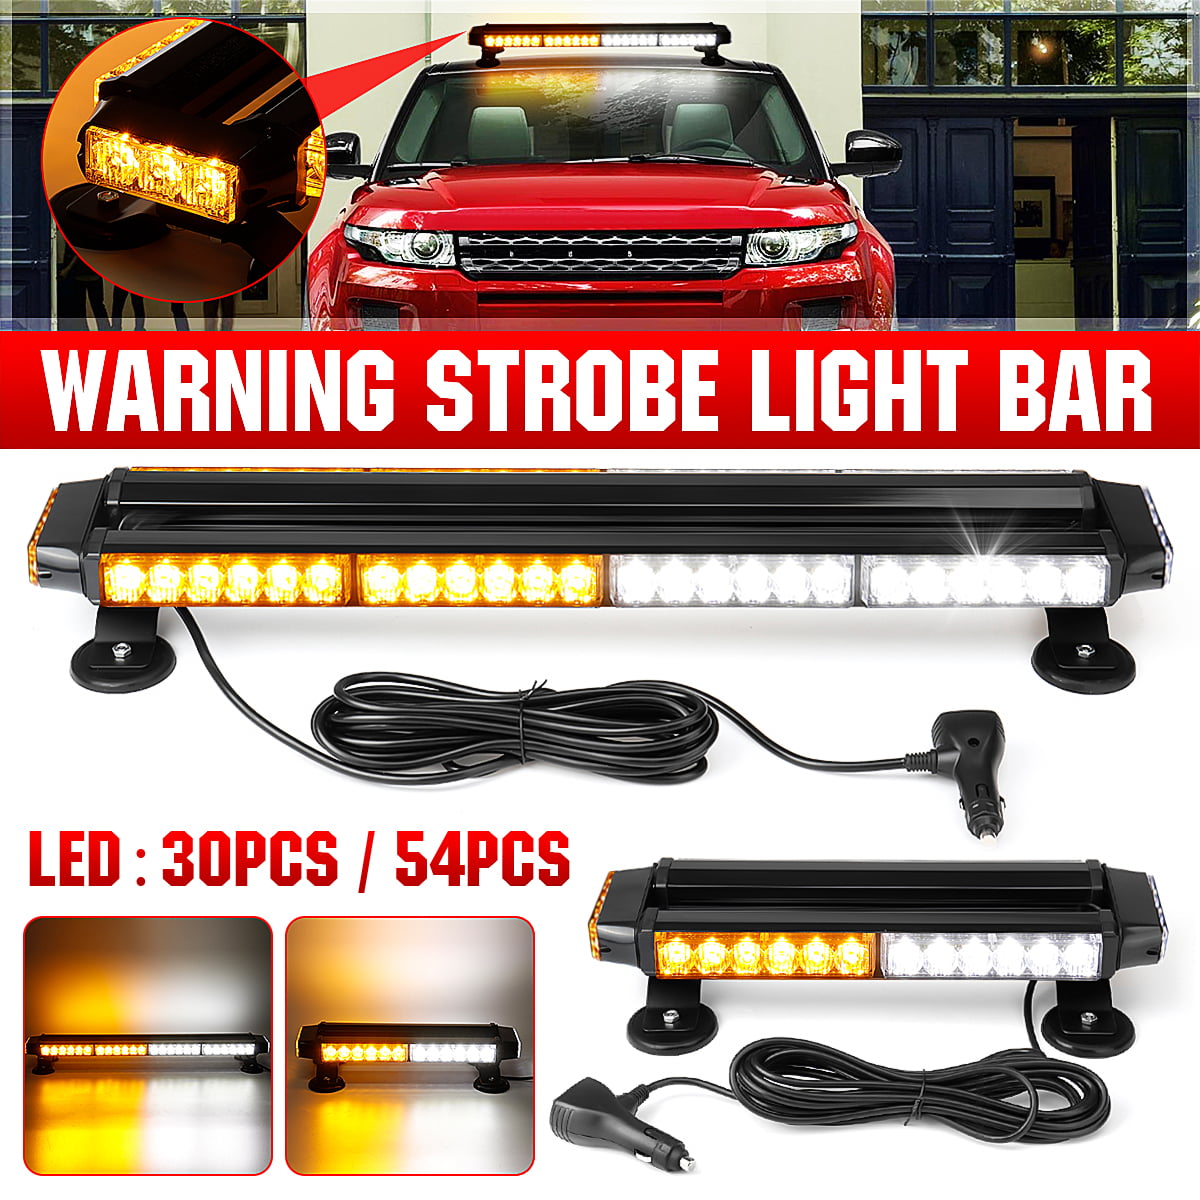 Red Response Vehicle Bright 3 LED Direction Warning Light For Van Strobe 